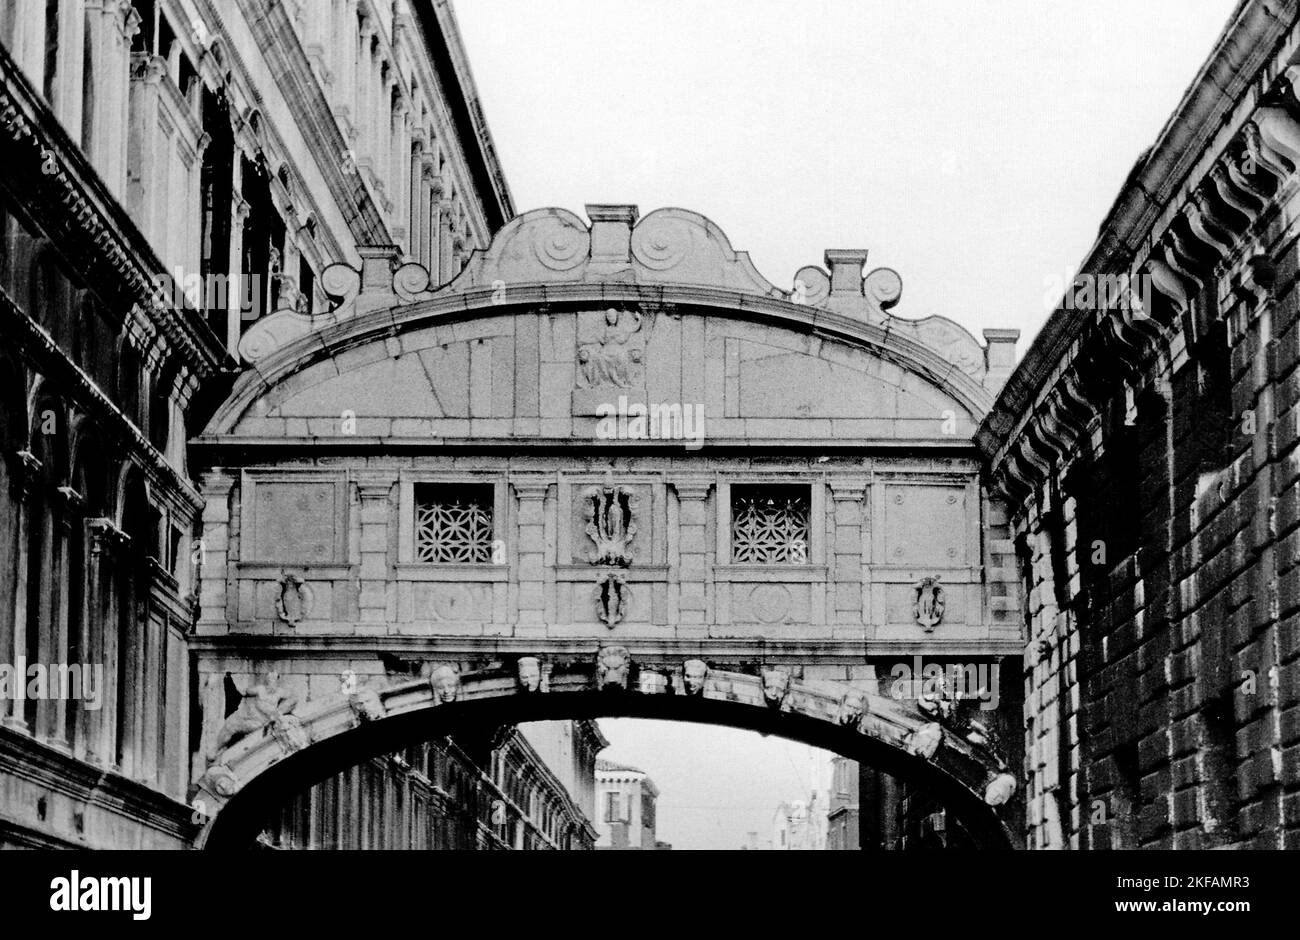 Italien in den 1950er Jahren - Die Seufzerbrücke - Ponte dei Sospiri in Venedig, Italien 1954. Italia nel 1950s - il Ponte dei Sospiri - Ponte dei Sospiri a Venezia 1954. Foto Stock